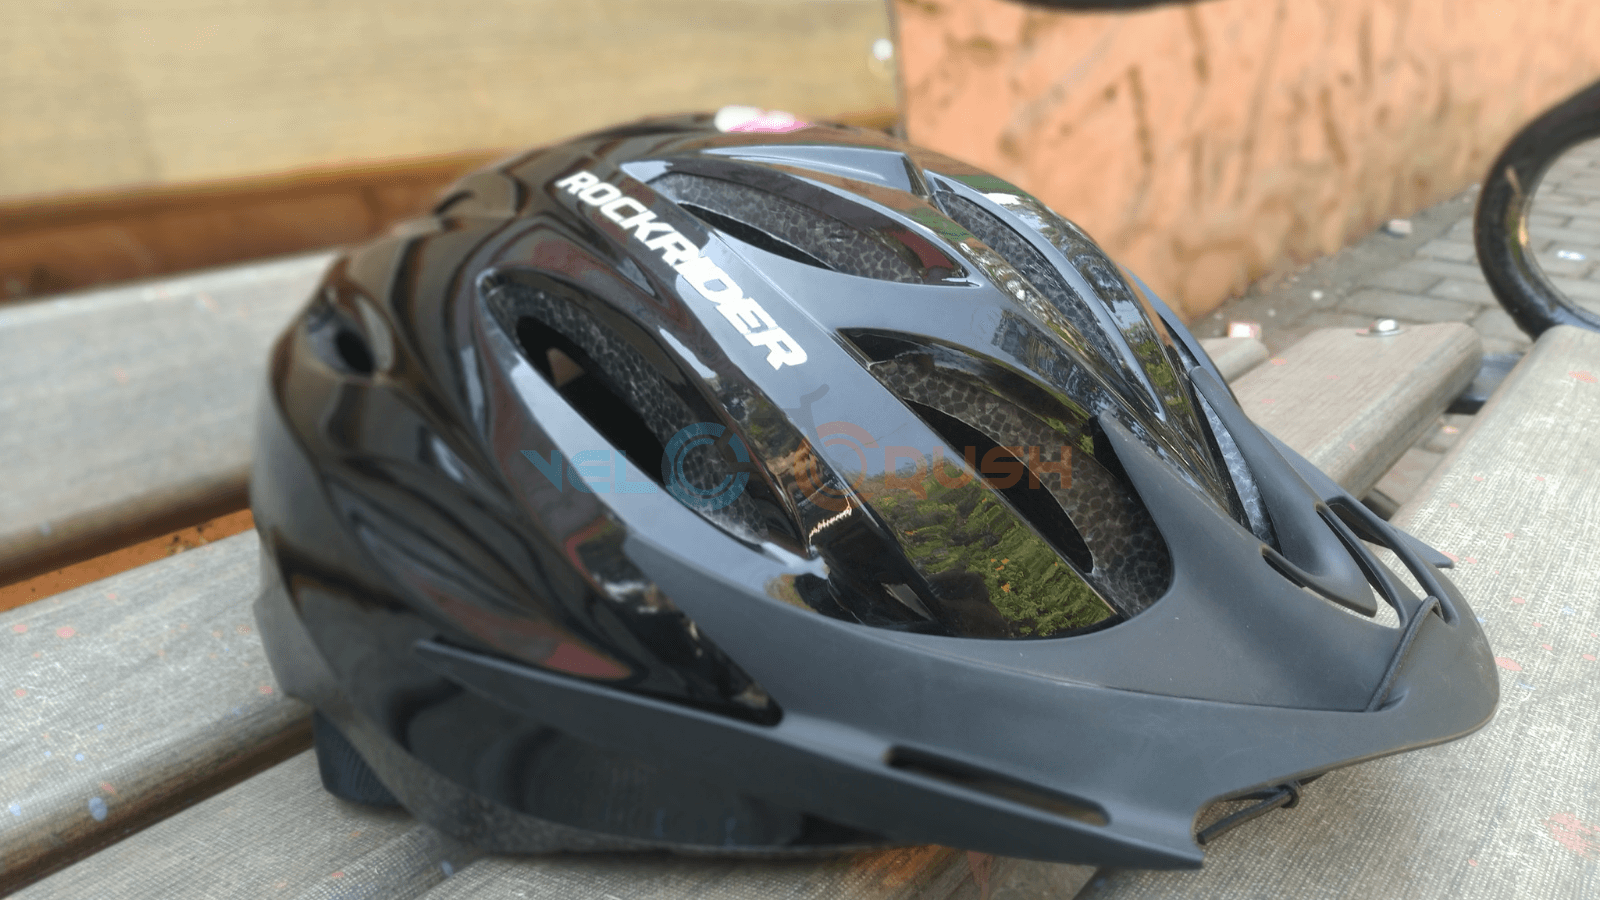 decathlon cycling helmets